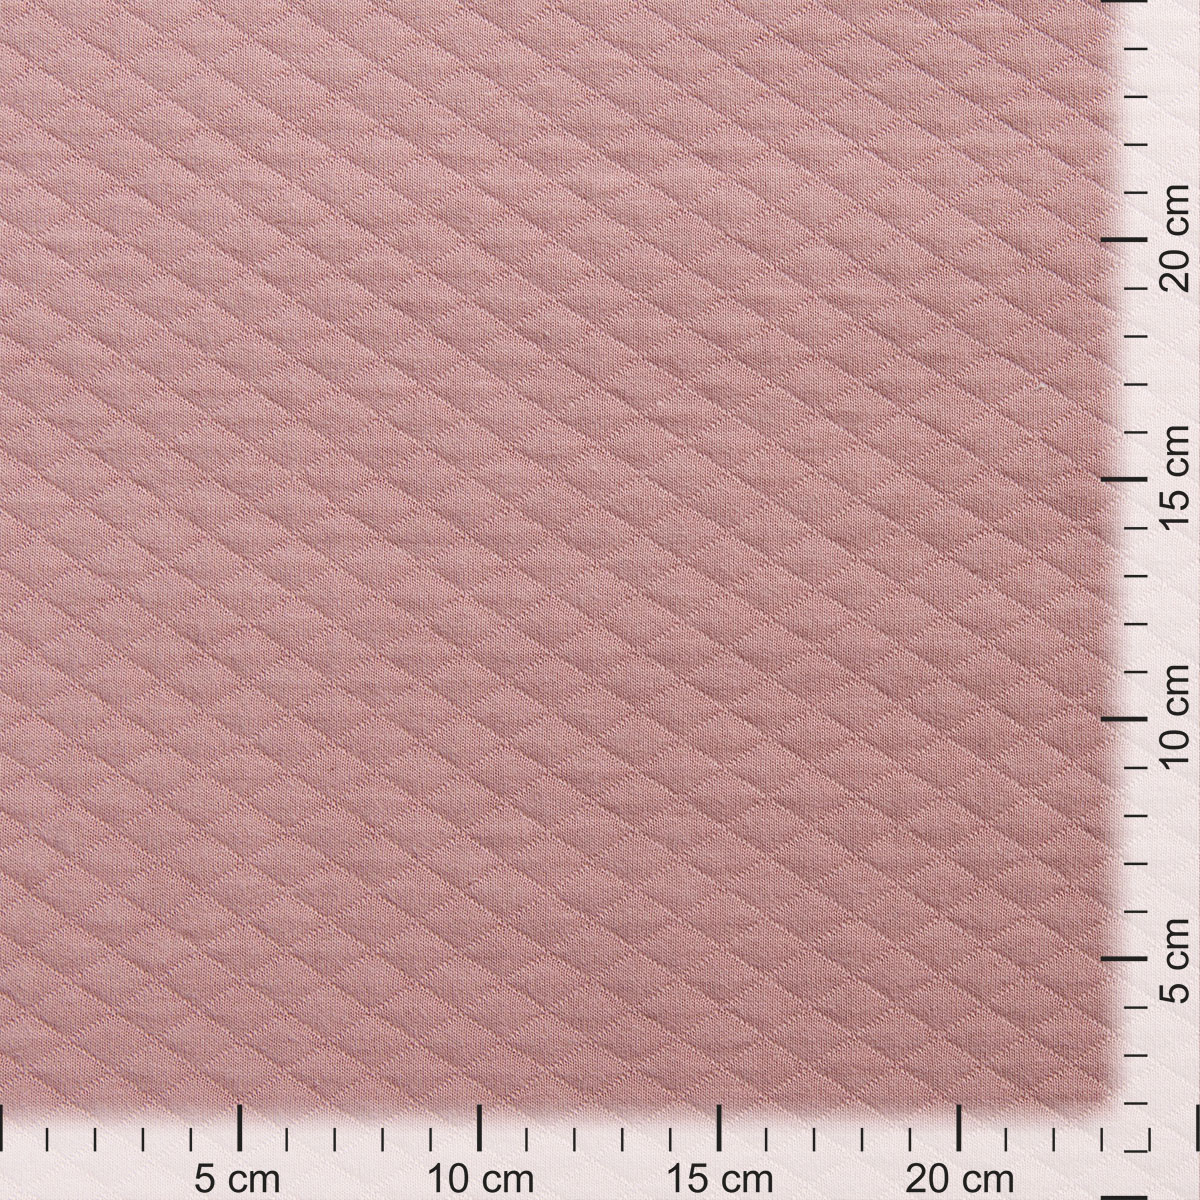 Dekostoff Barney rosa in 1,6m Breite (METERWARE) Baumwollstoff Stoff aus 85% Baumwolle